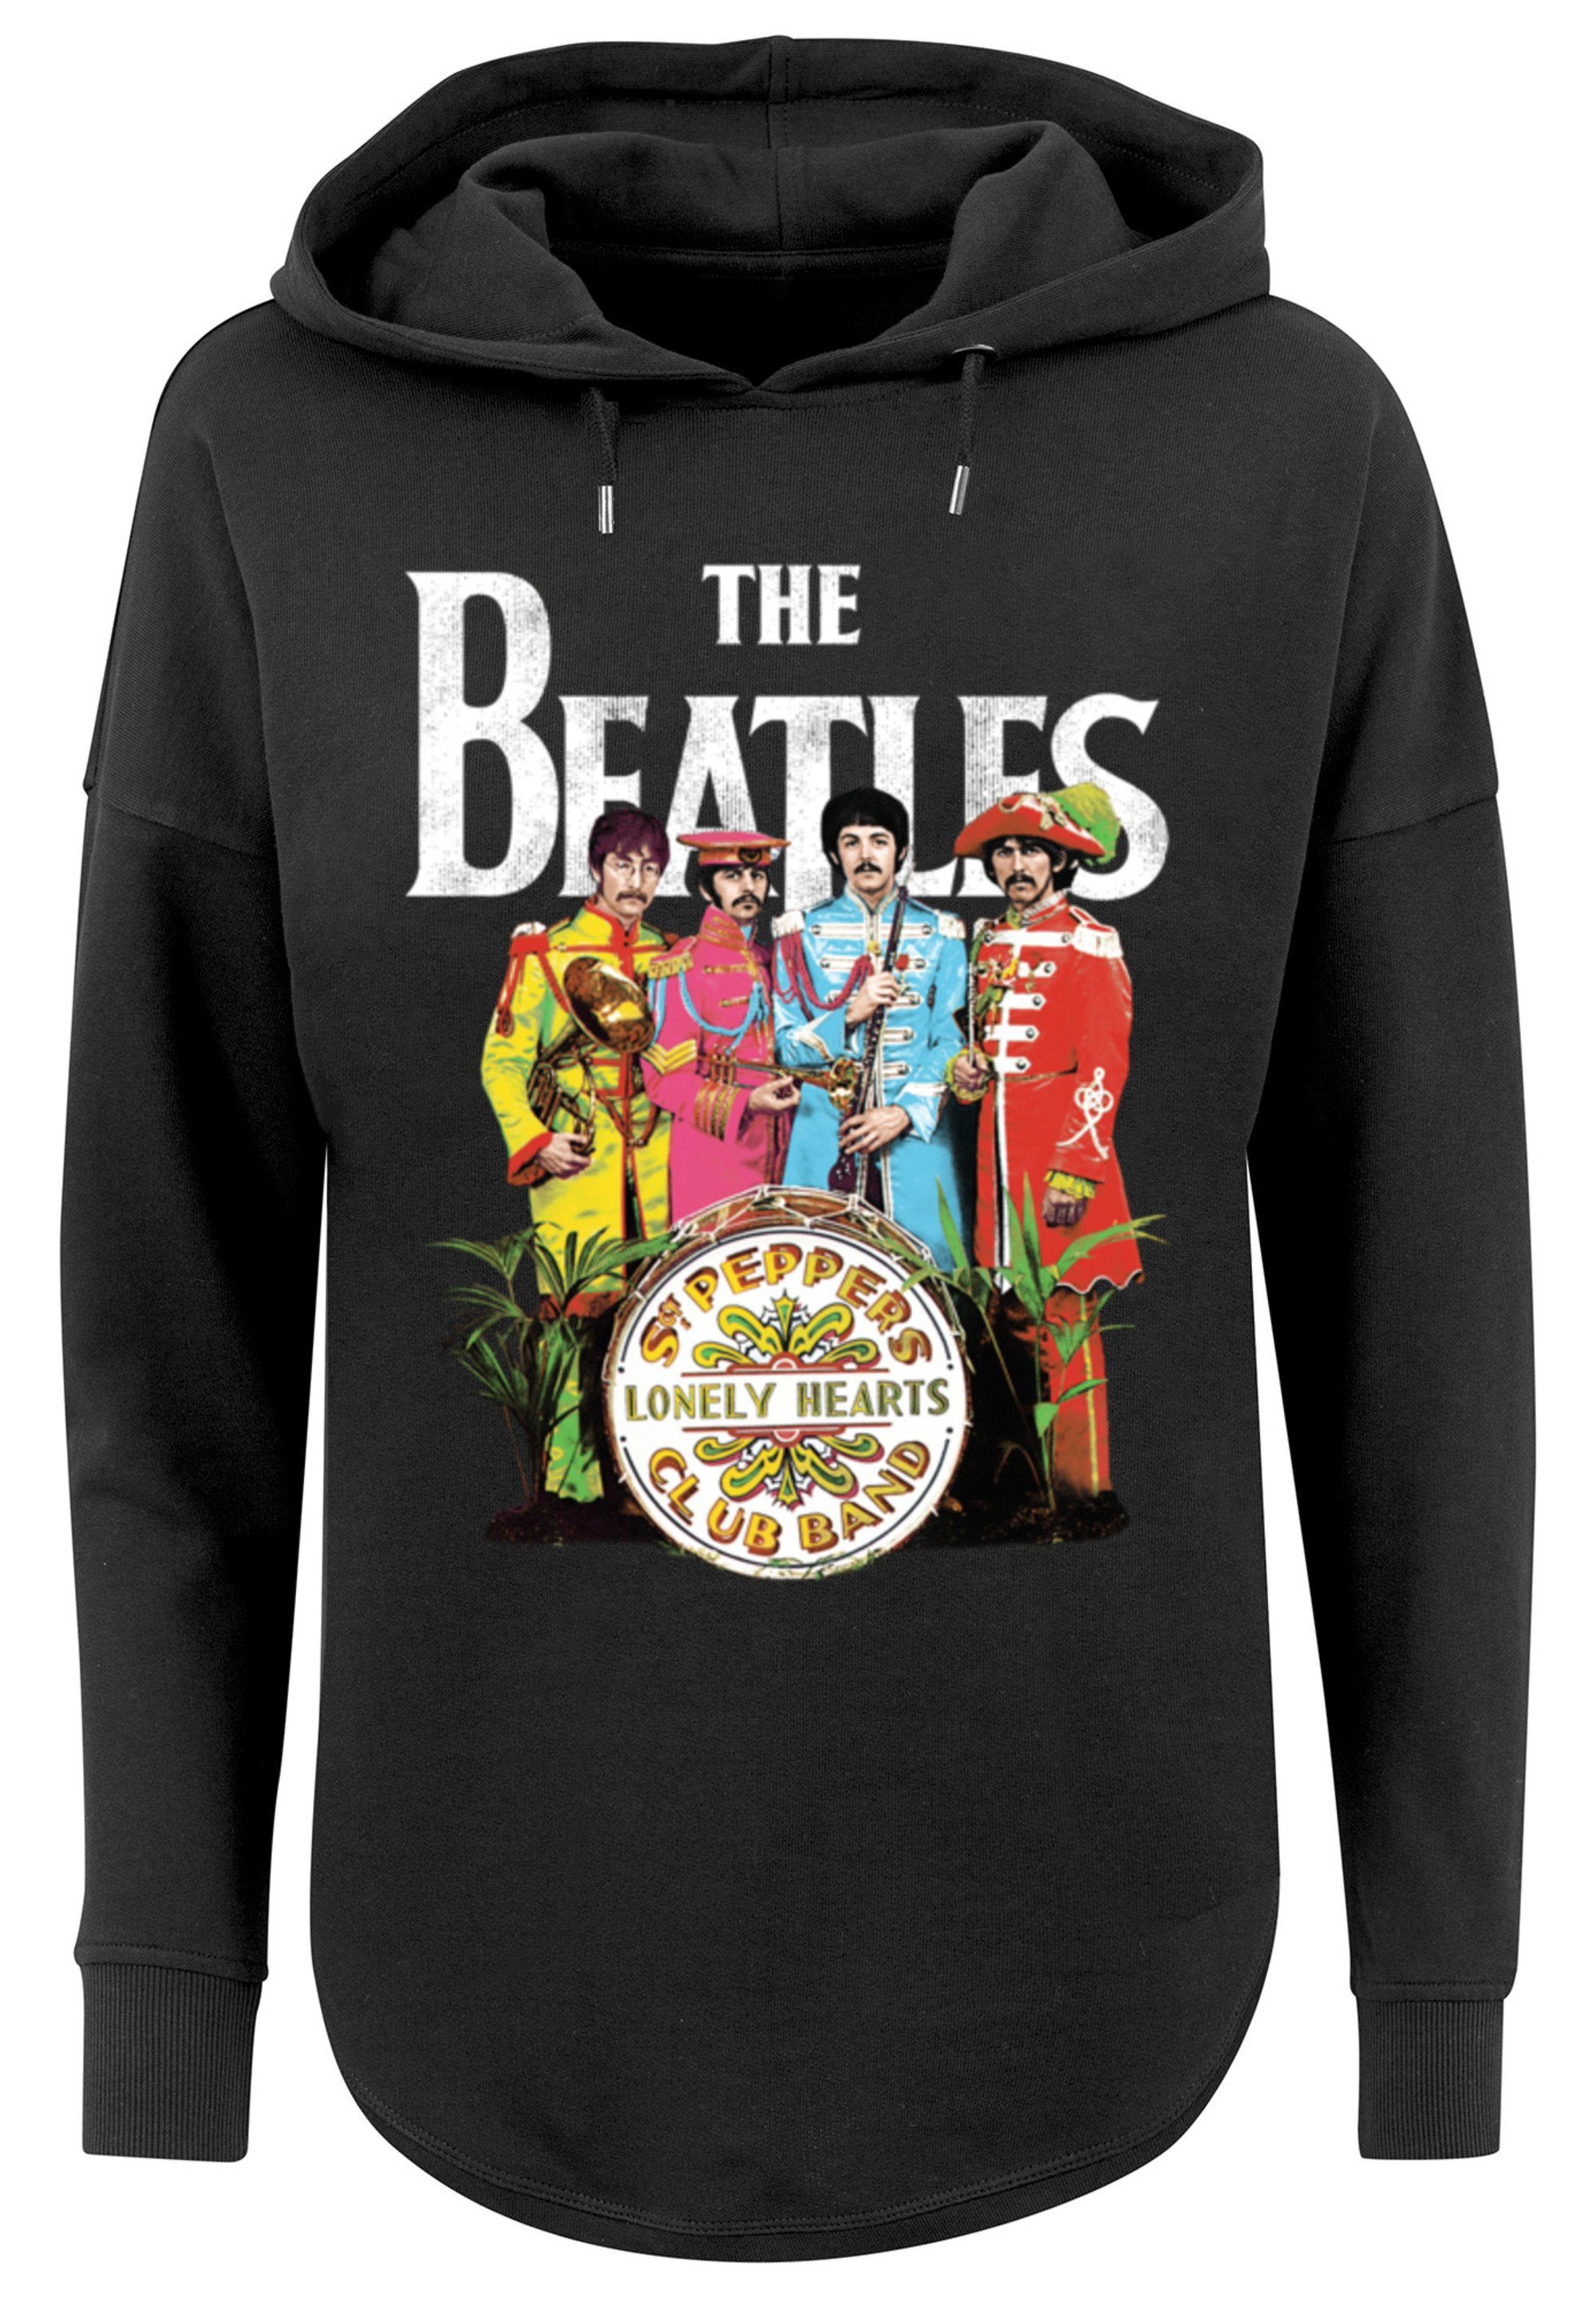 F4NT4STIC Kapuzenpullover The Beatles Band Black schwarz Pepper Print Sgt